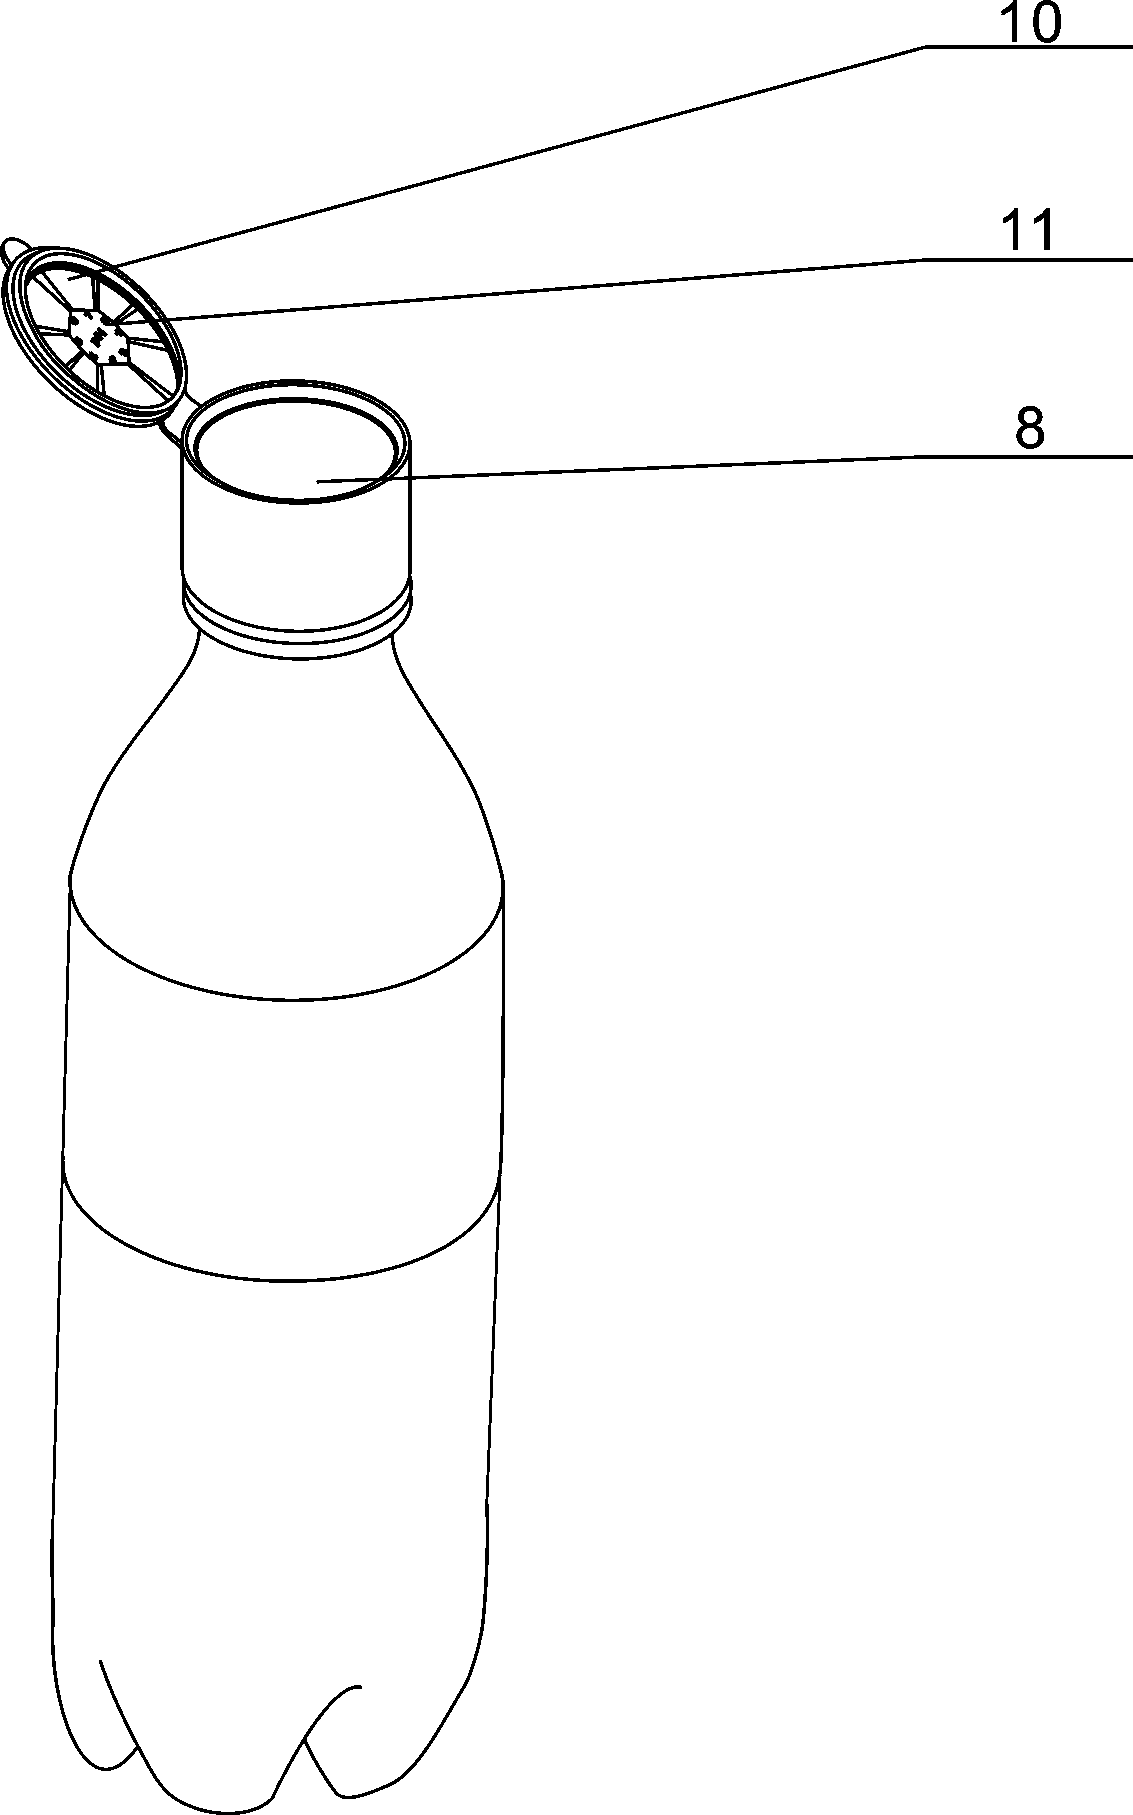 Bottle cap capable of detecting PH value